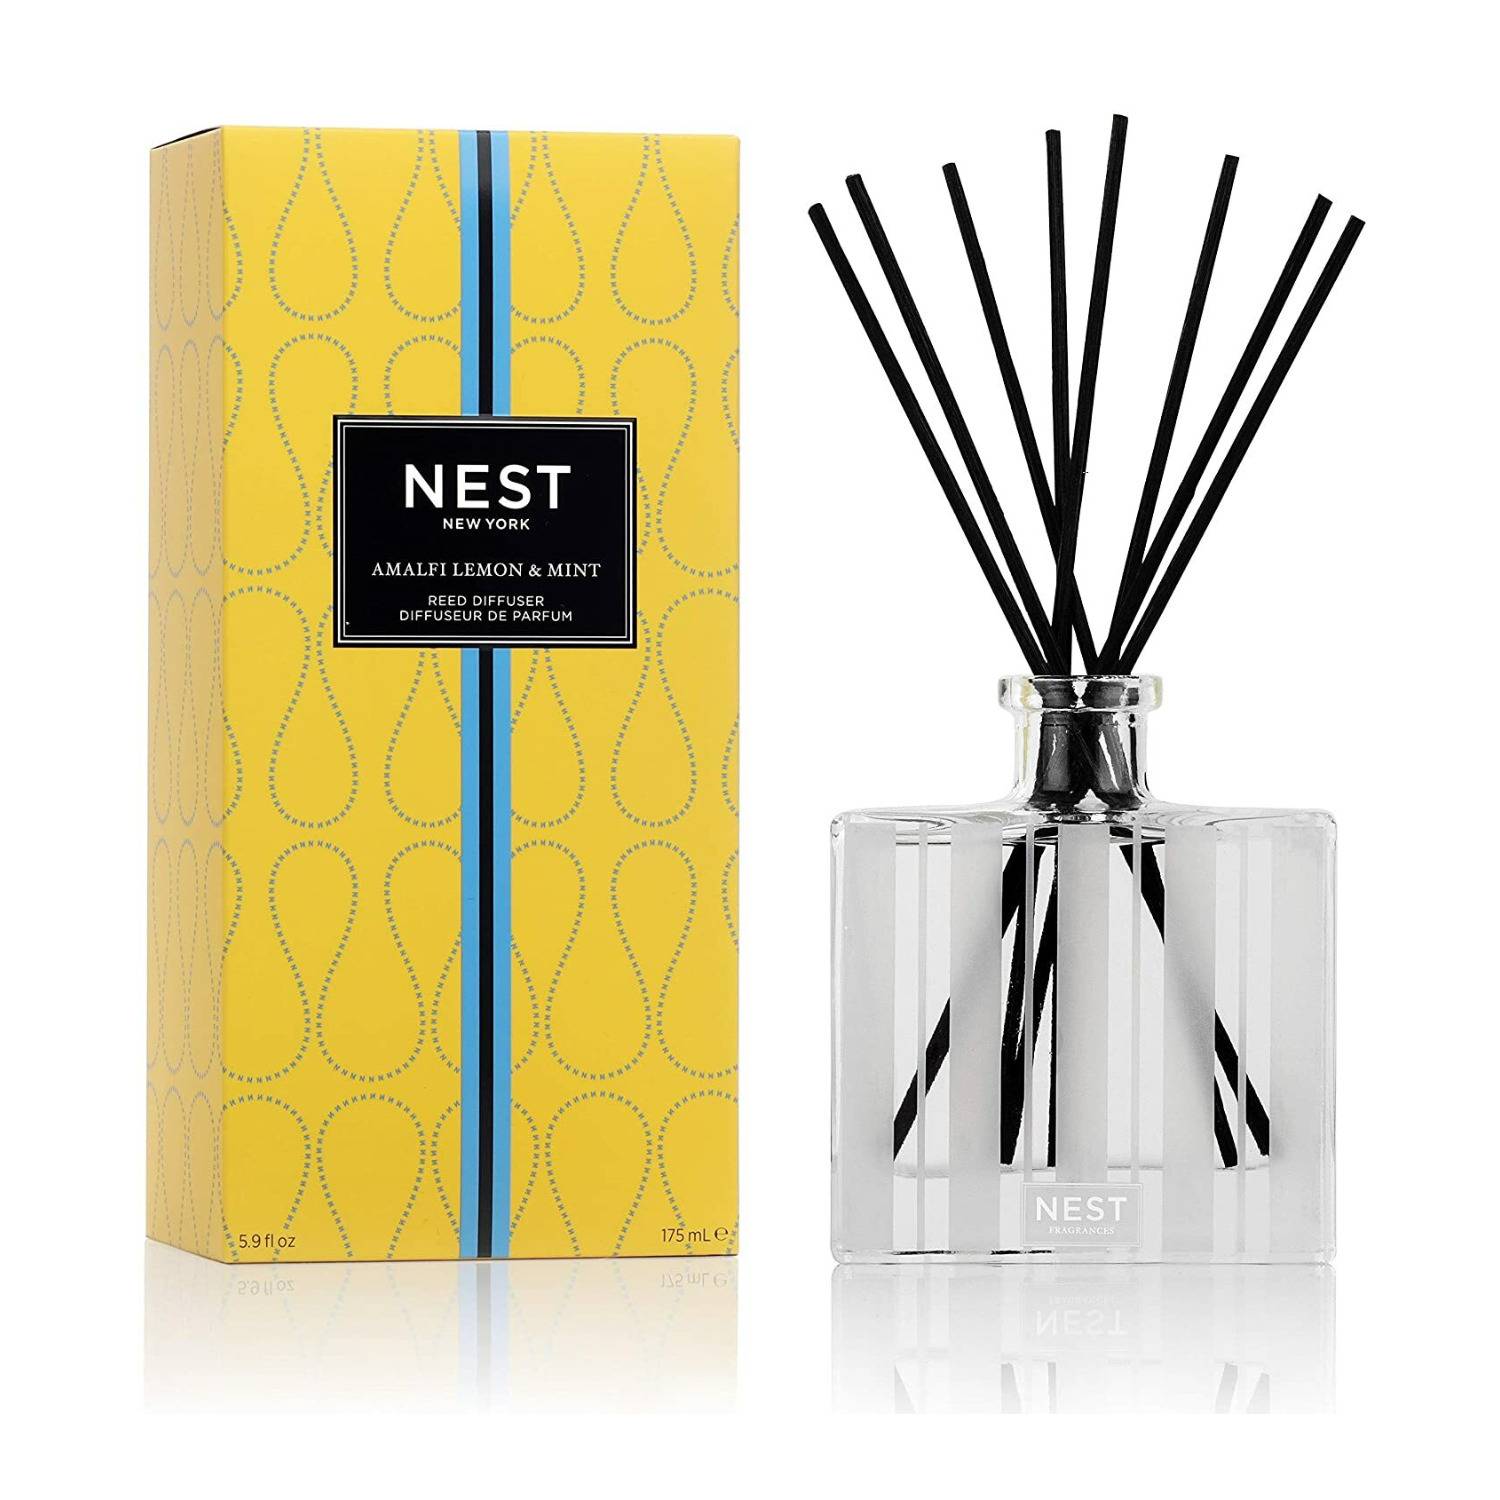 Nest New York Fragrances Amalfi Lemon and Mint Reed Diffuser